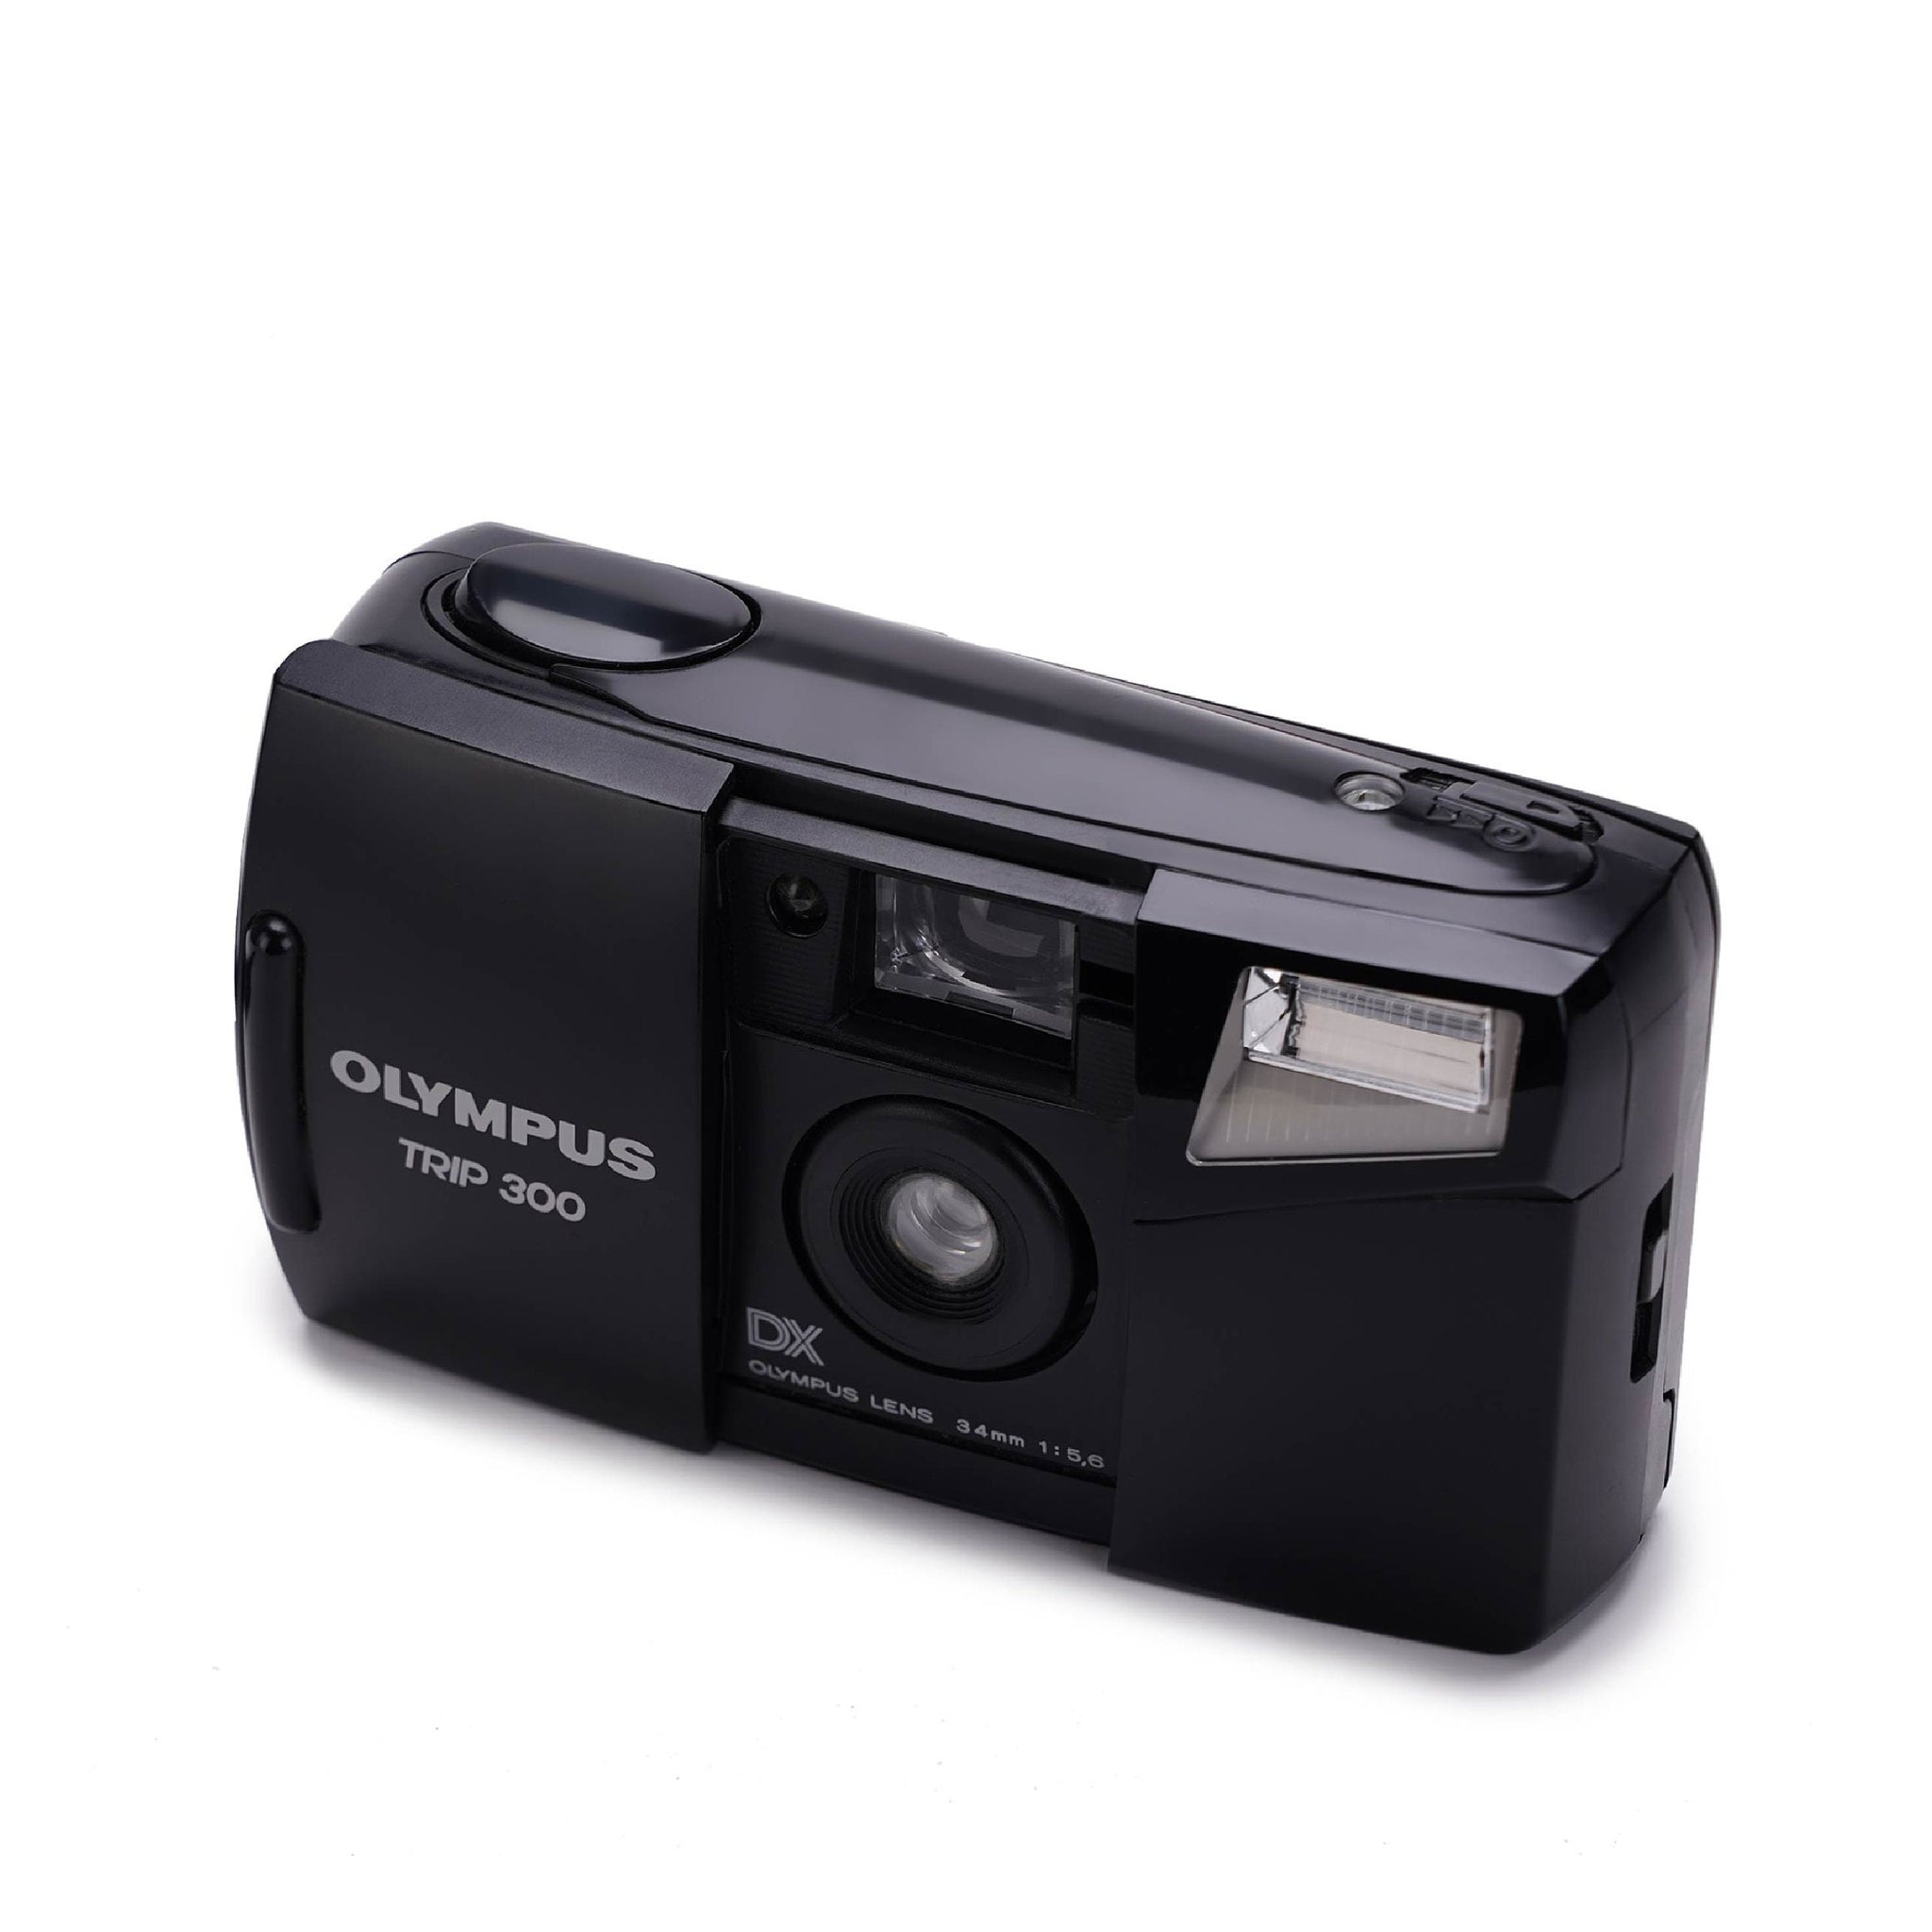 Olympus camera, Olympus Trip 300, 35mm film camera, Olympus 500, vintage shutter, Birthday gift, Photographer gift